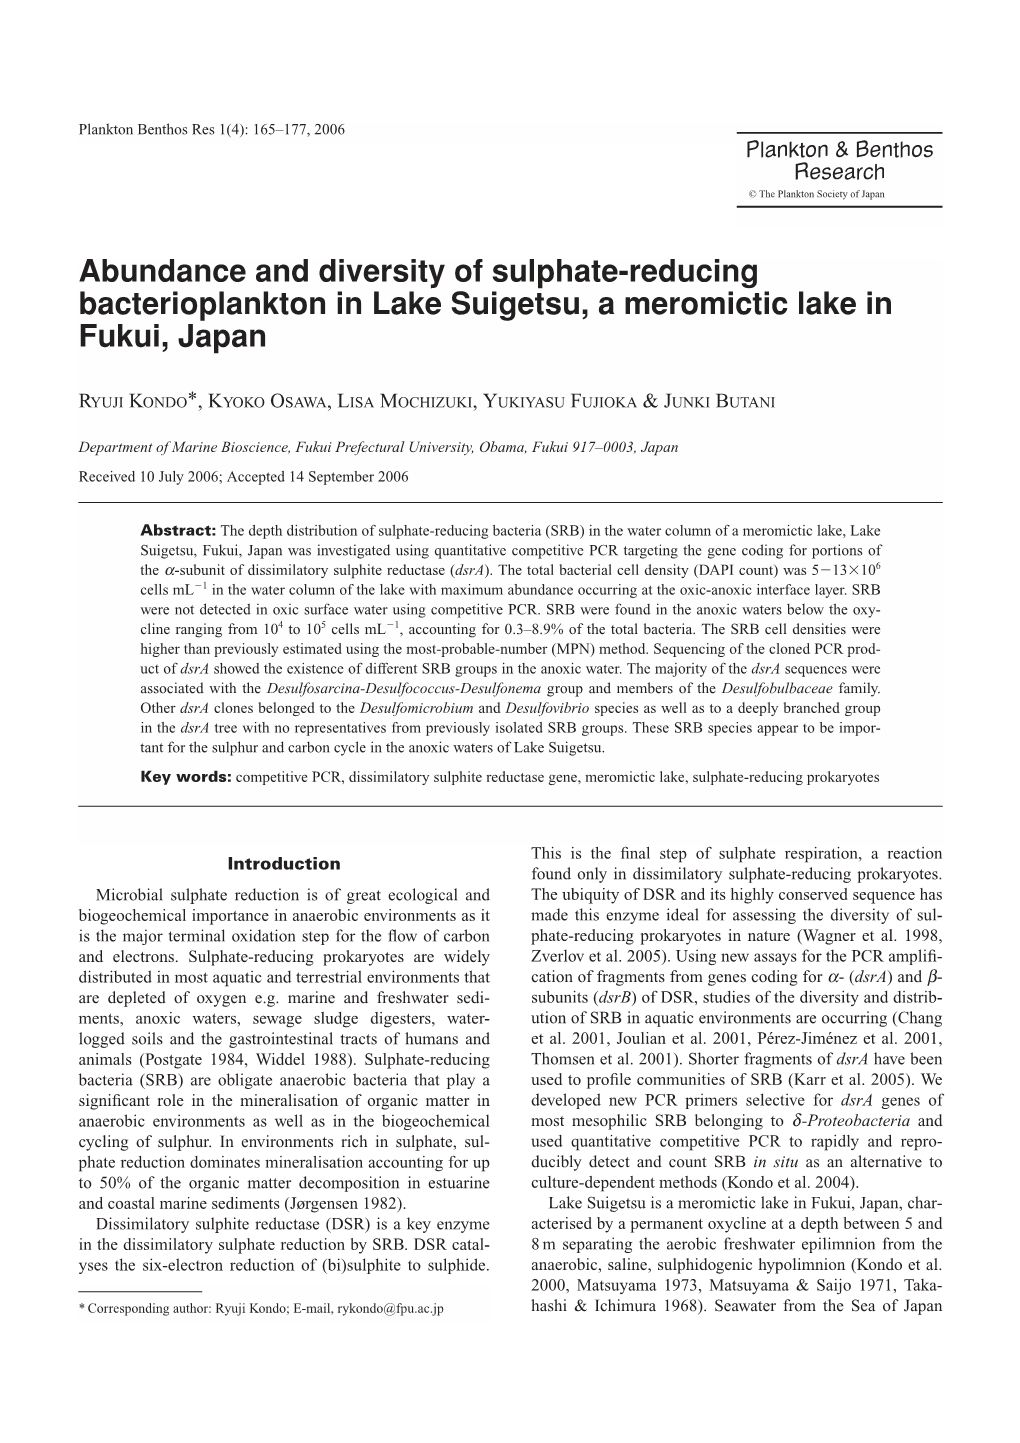 Abundance and Diversity of Sulphate-Reducing Bacterioplankton in Lake Suigetsu, a Meromictic Lake in Fukui, Japan